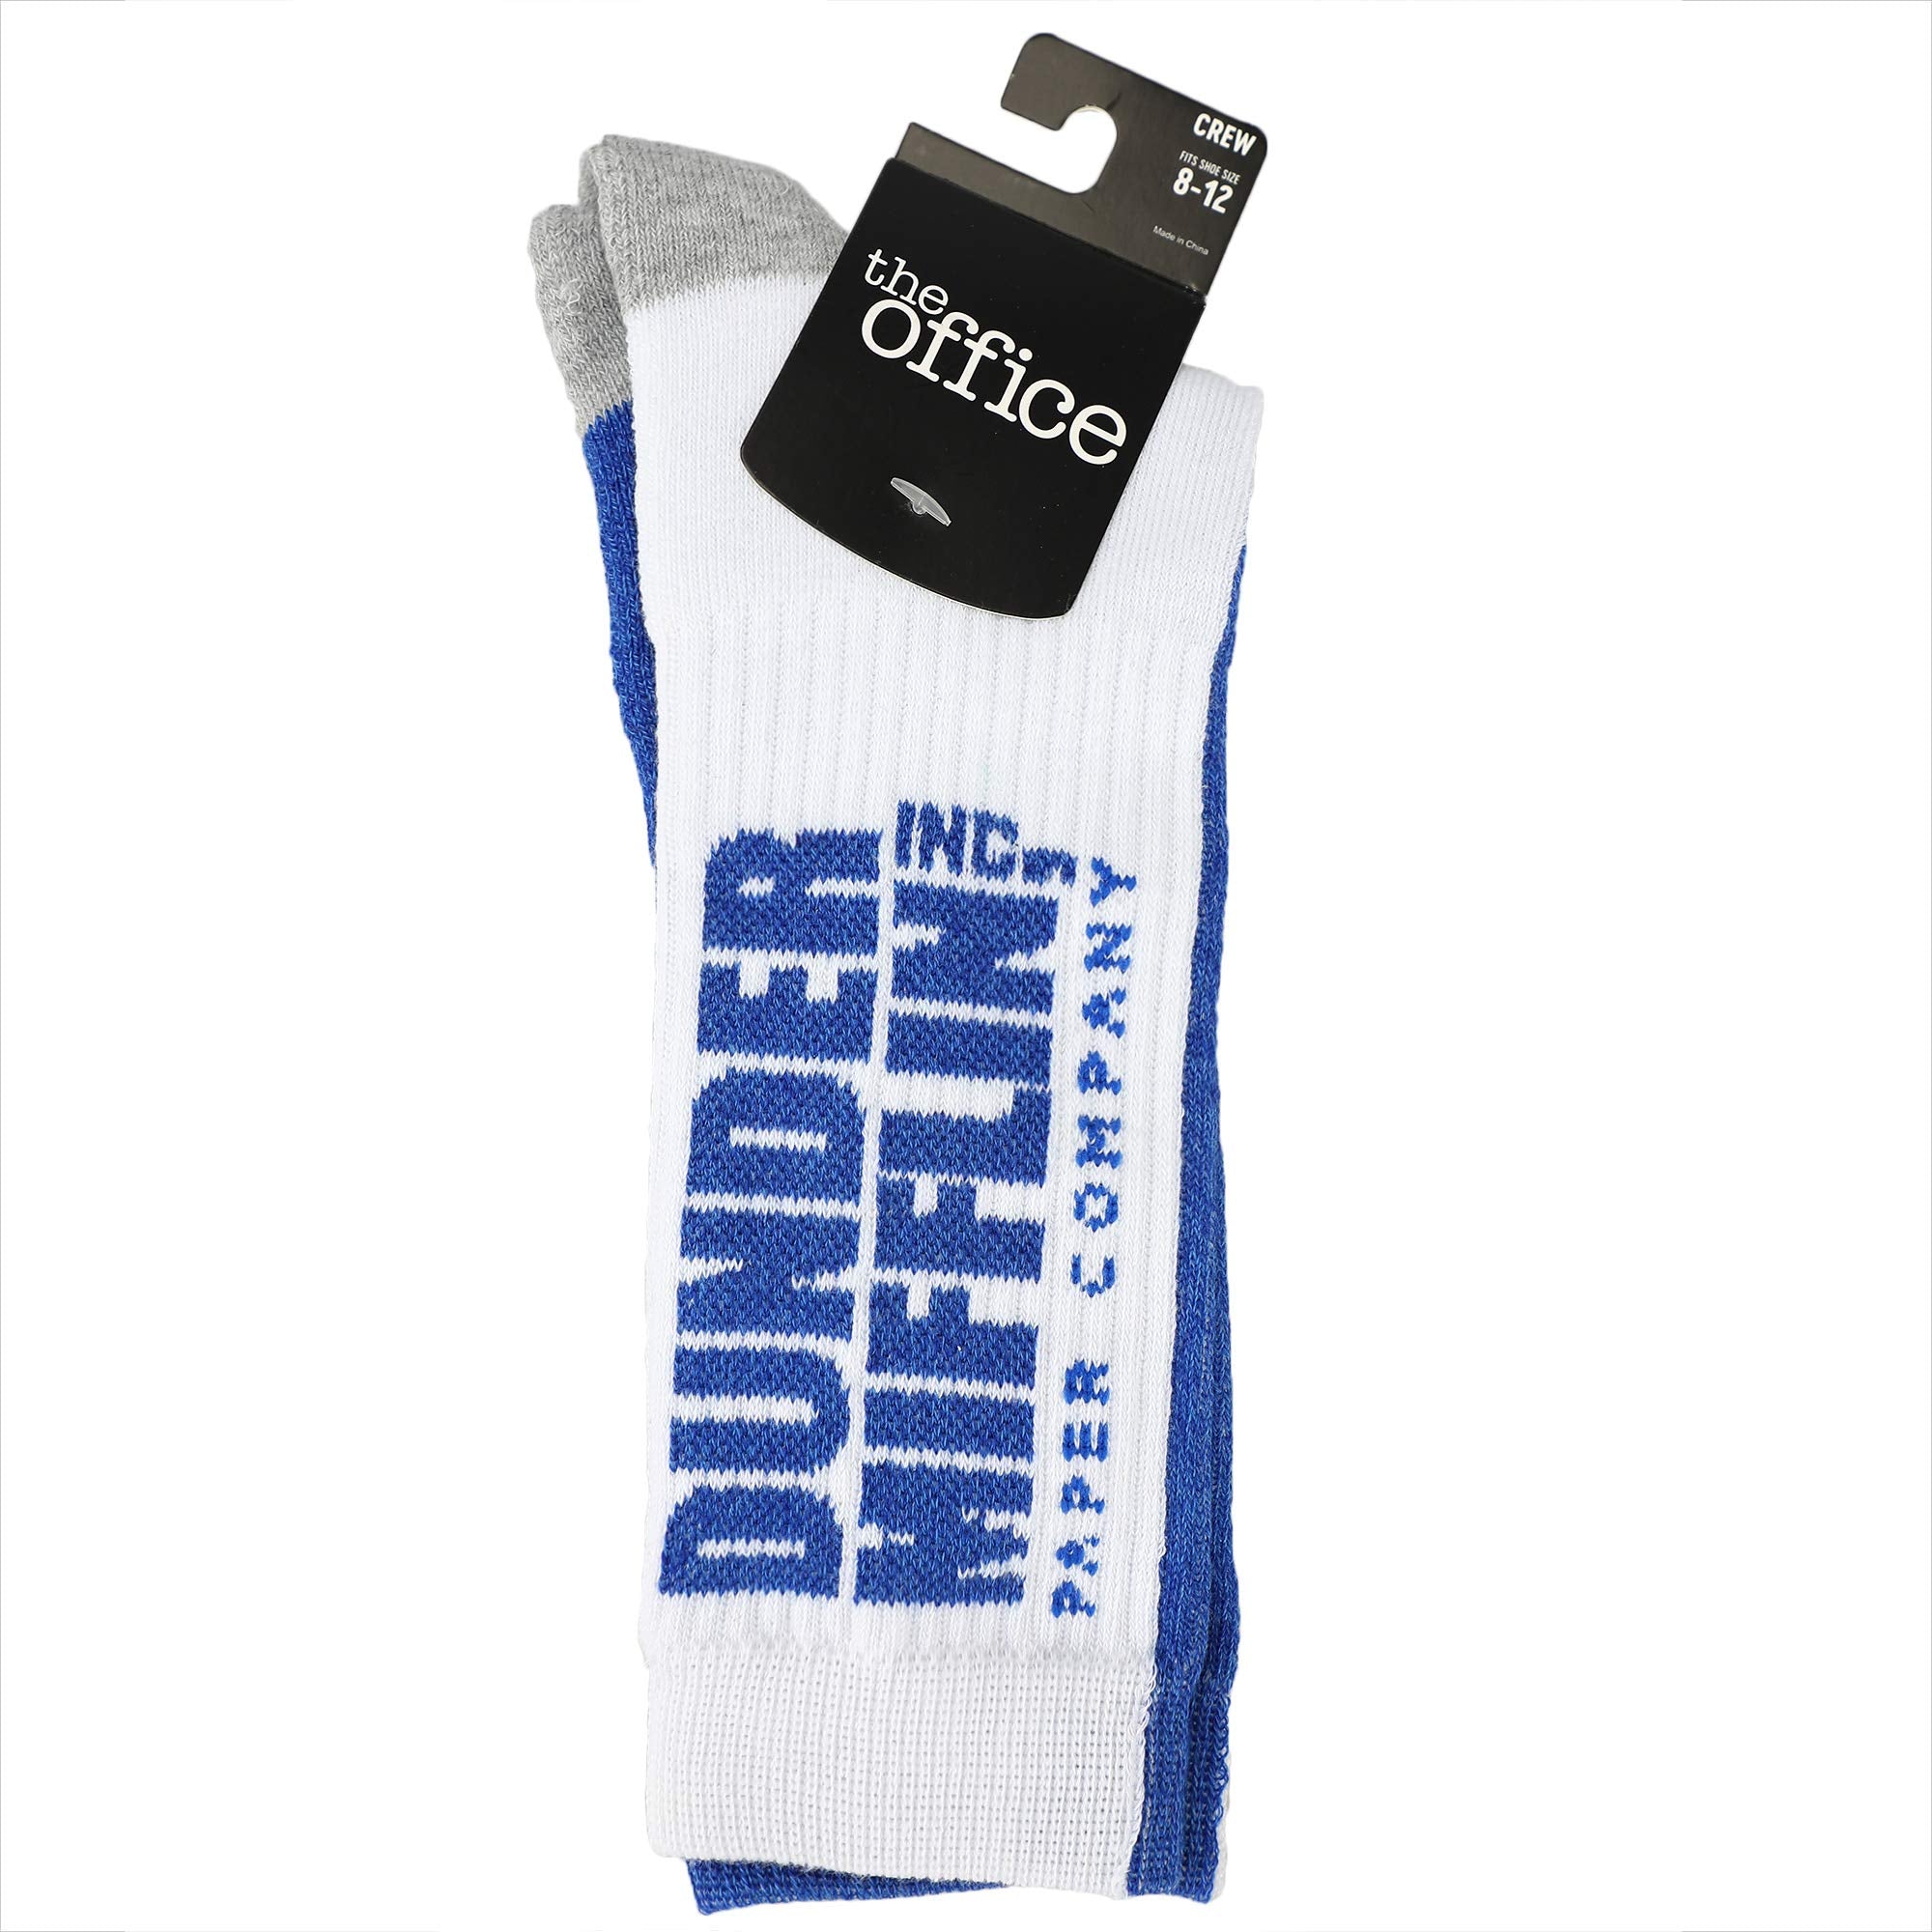 The Office Dunder Mifflin Crew Socks